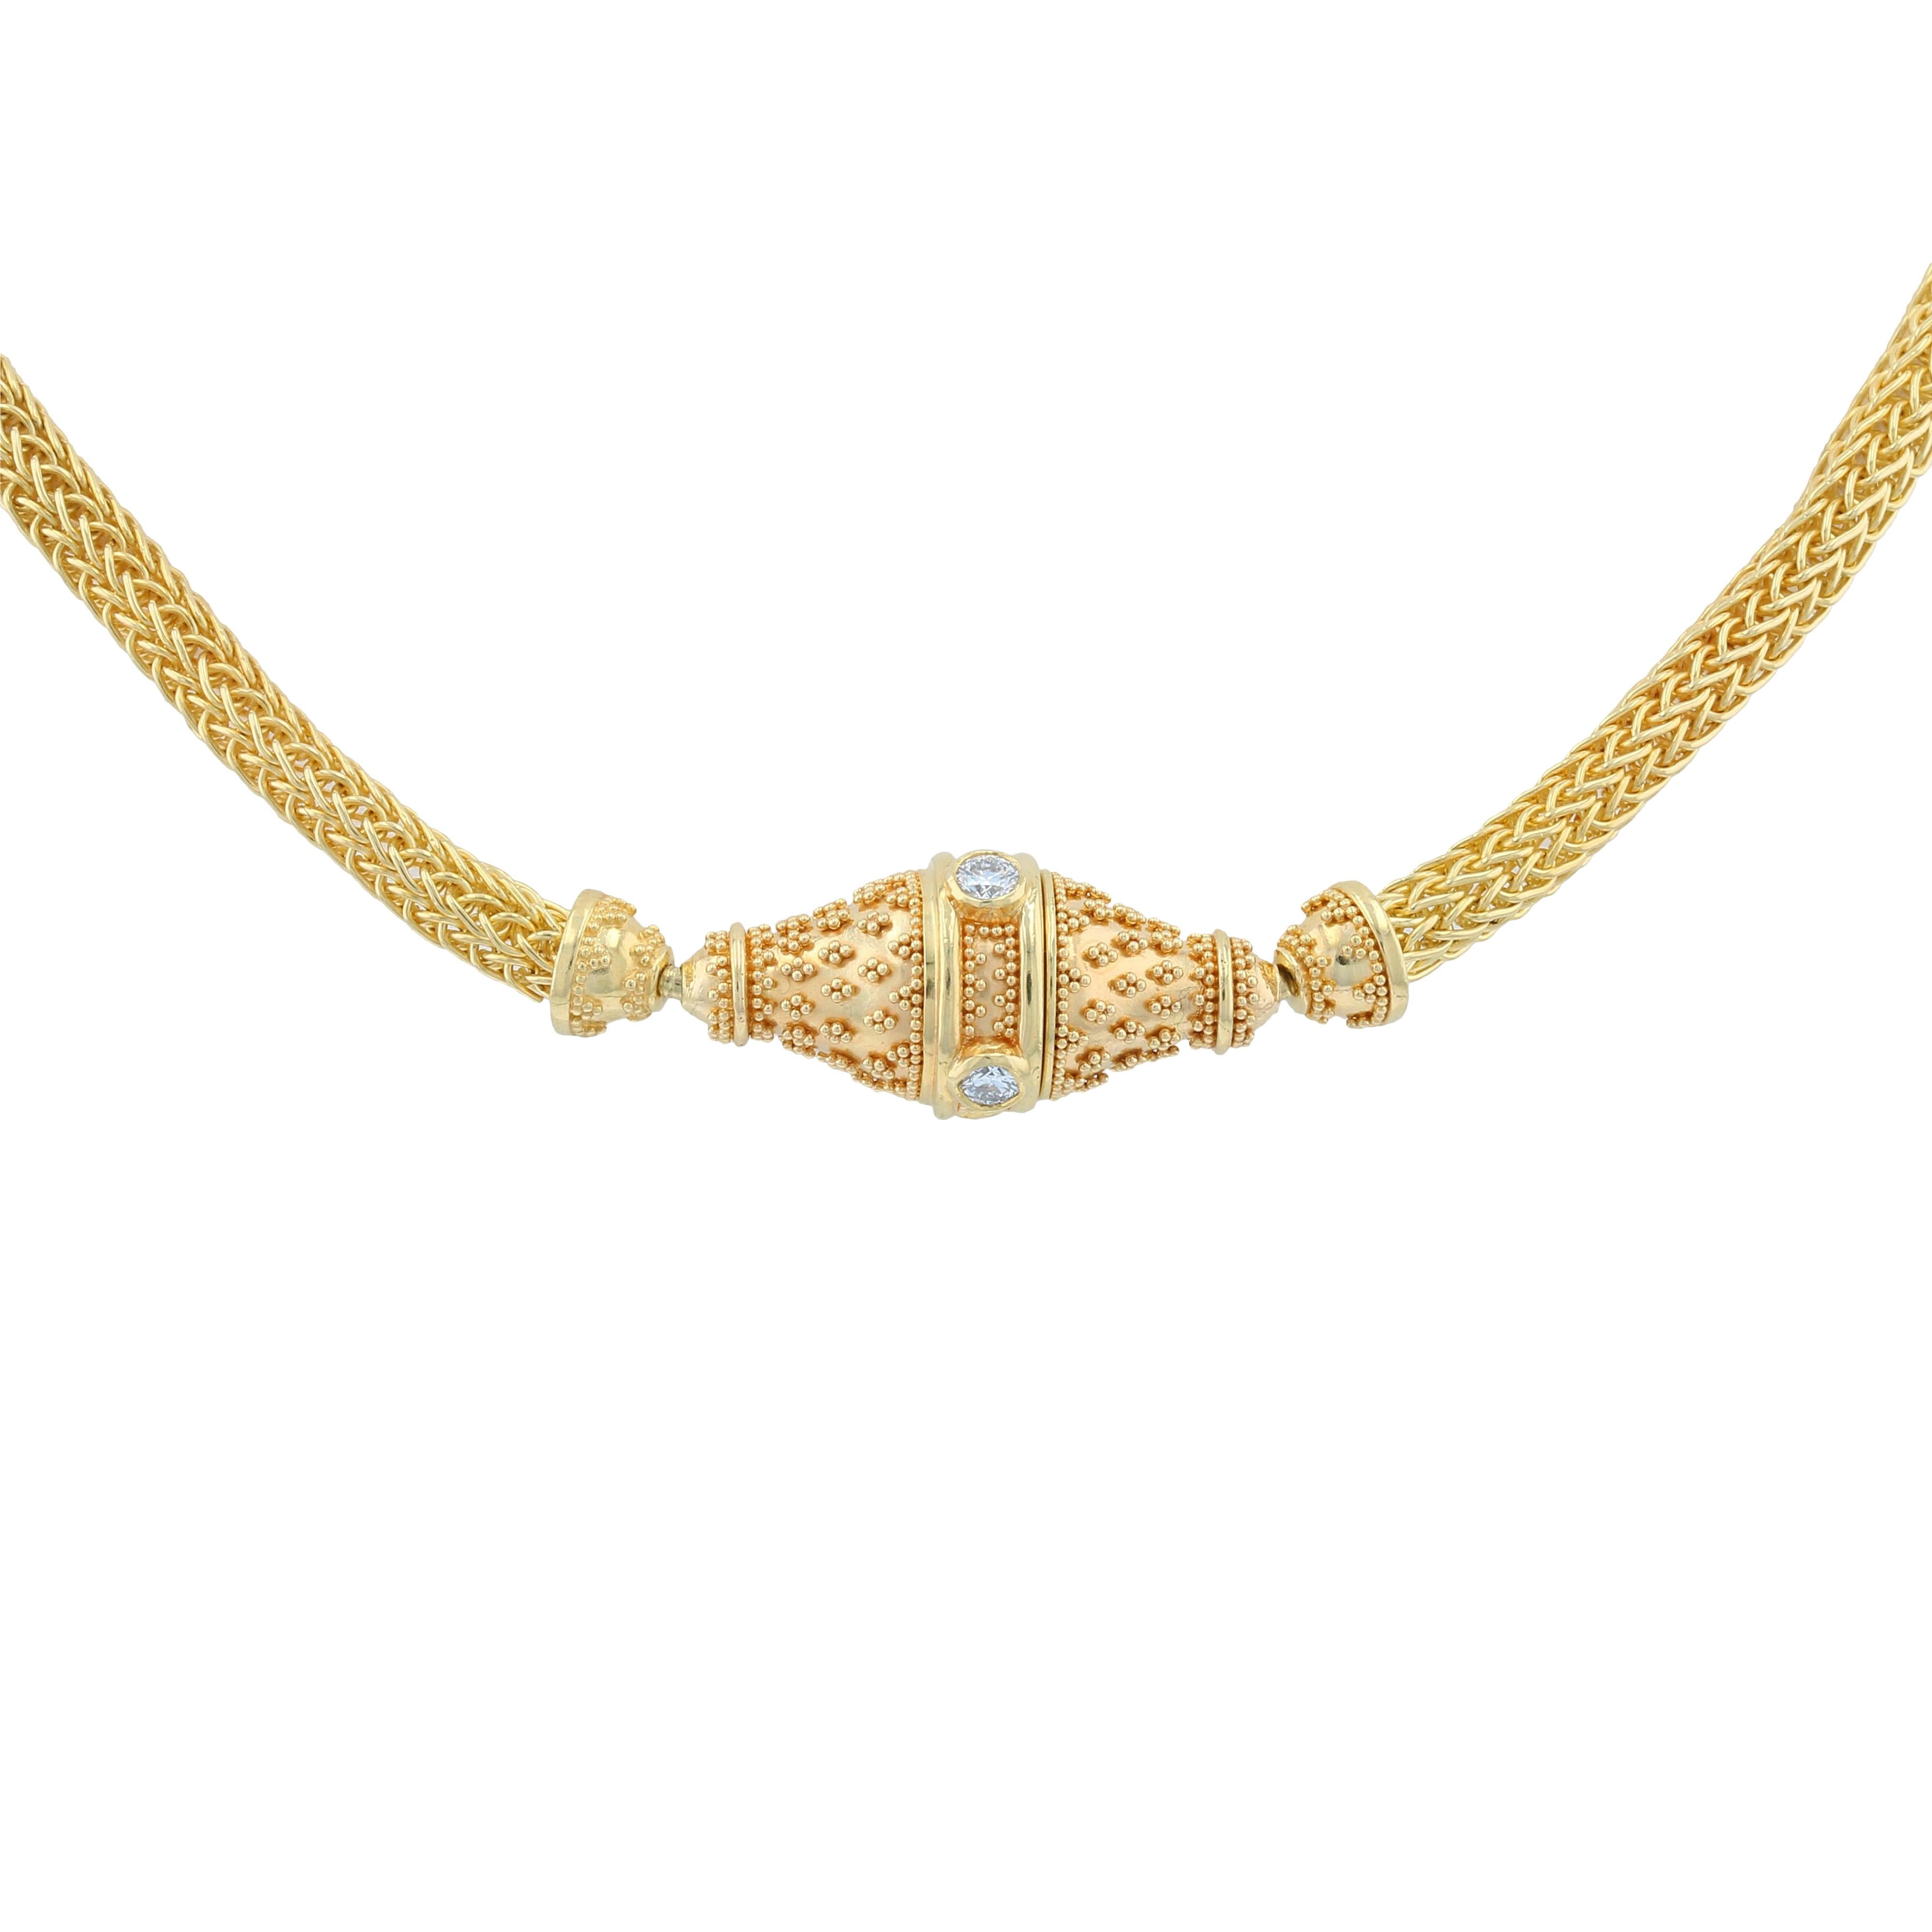 12grm gold chain